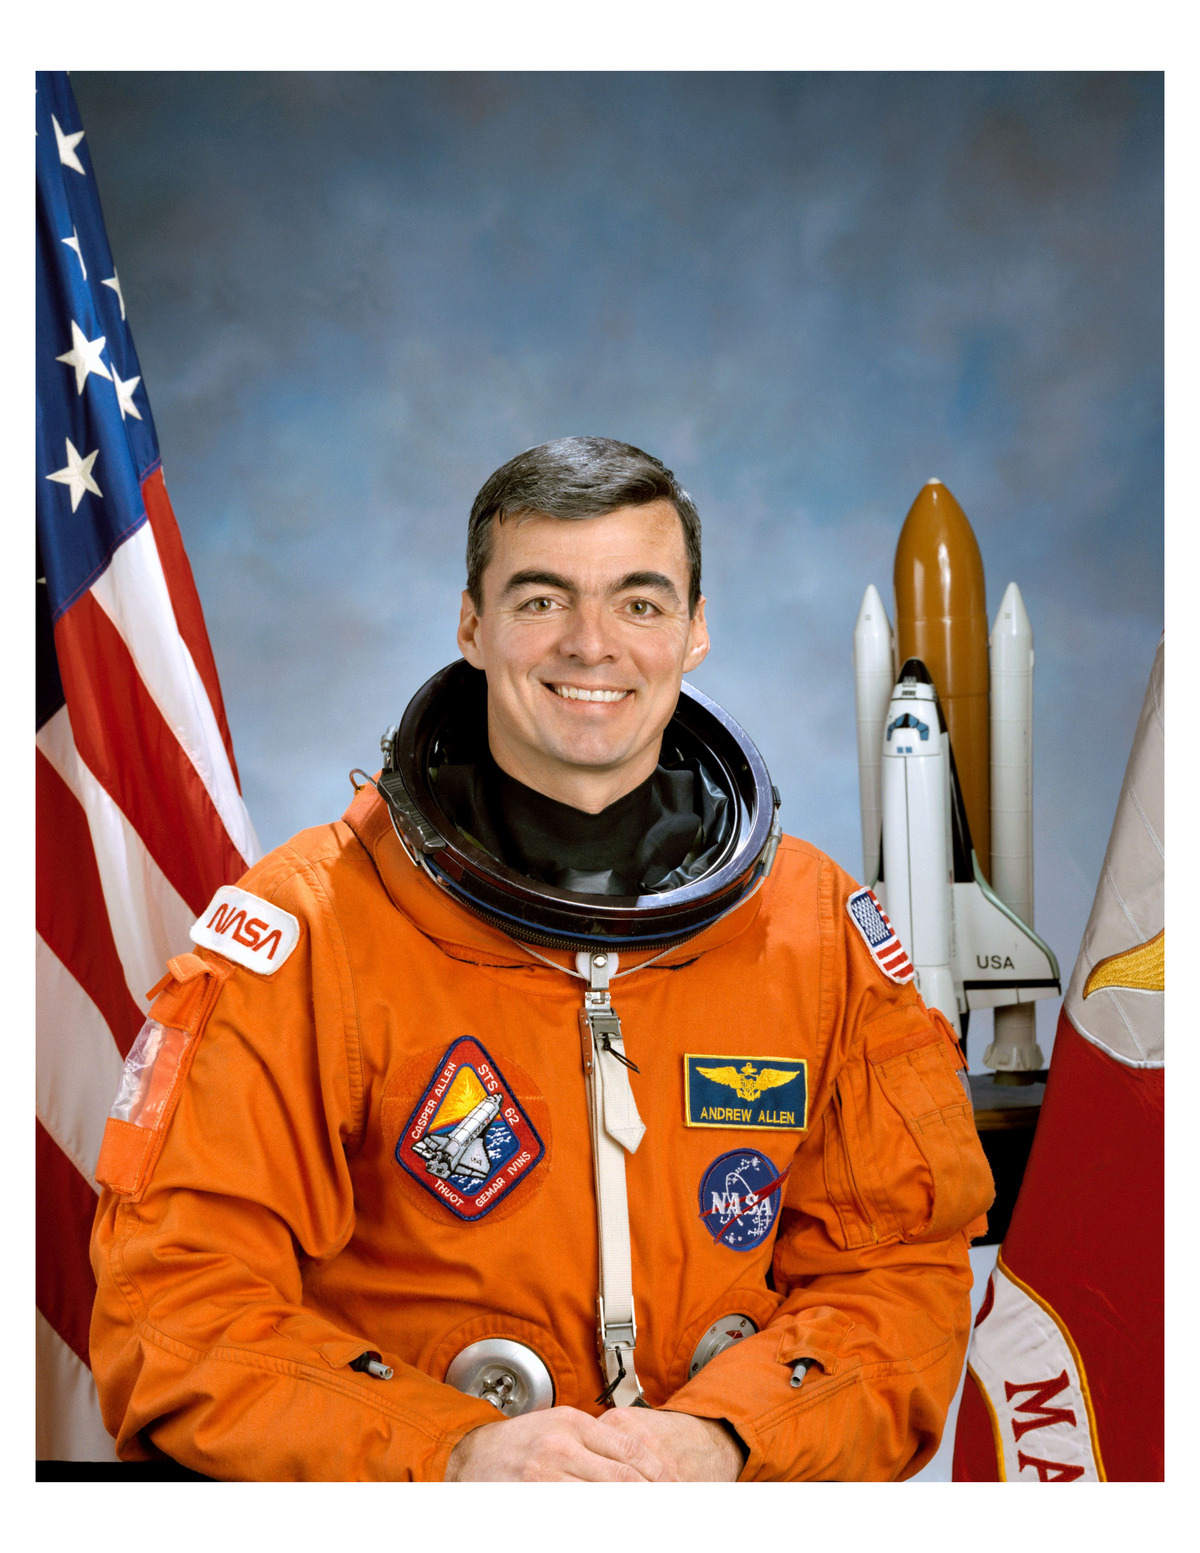 1994 NASA Astronaut Andrew Allen 8x10 Portrait Photo On 8.5